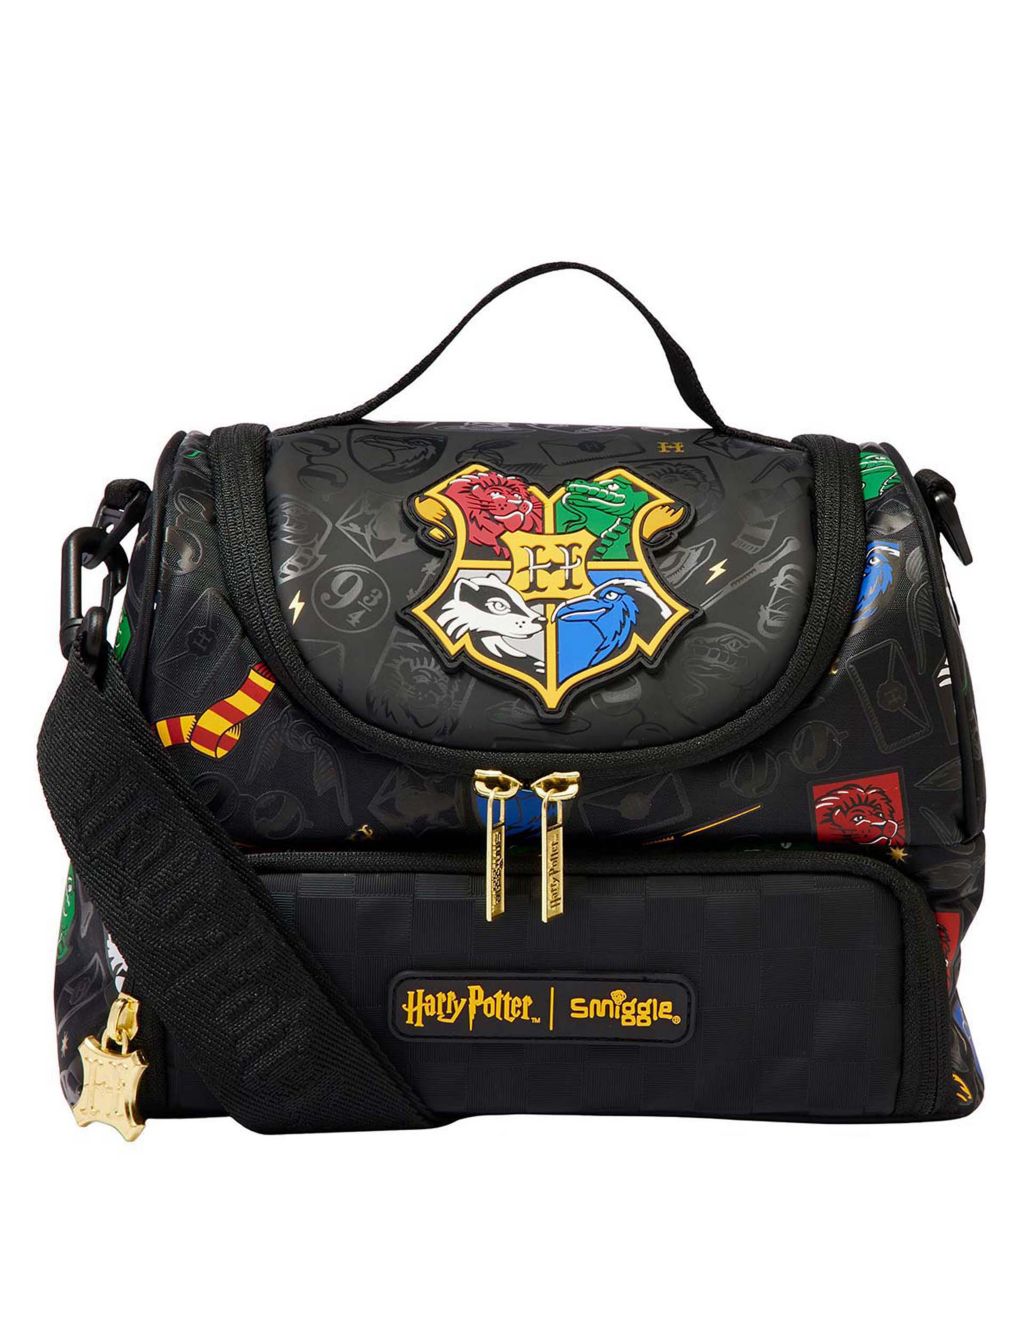 Kids' Harry Potter™ Lunch Box image 1